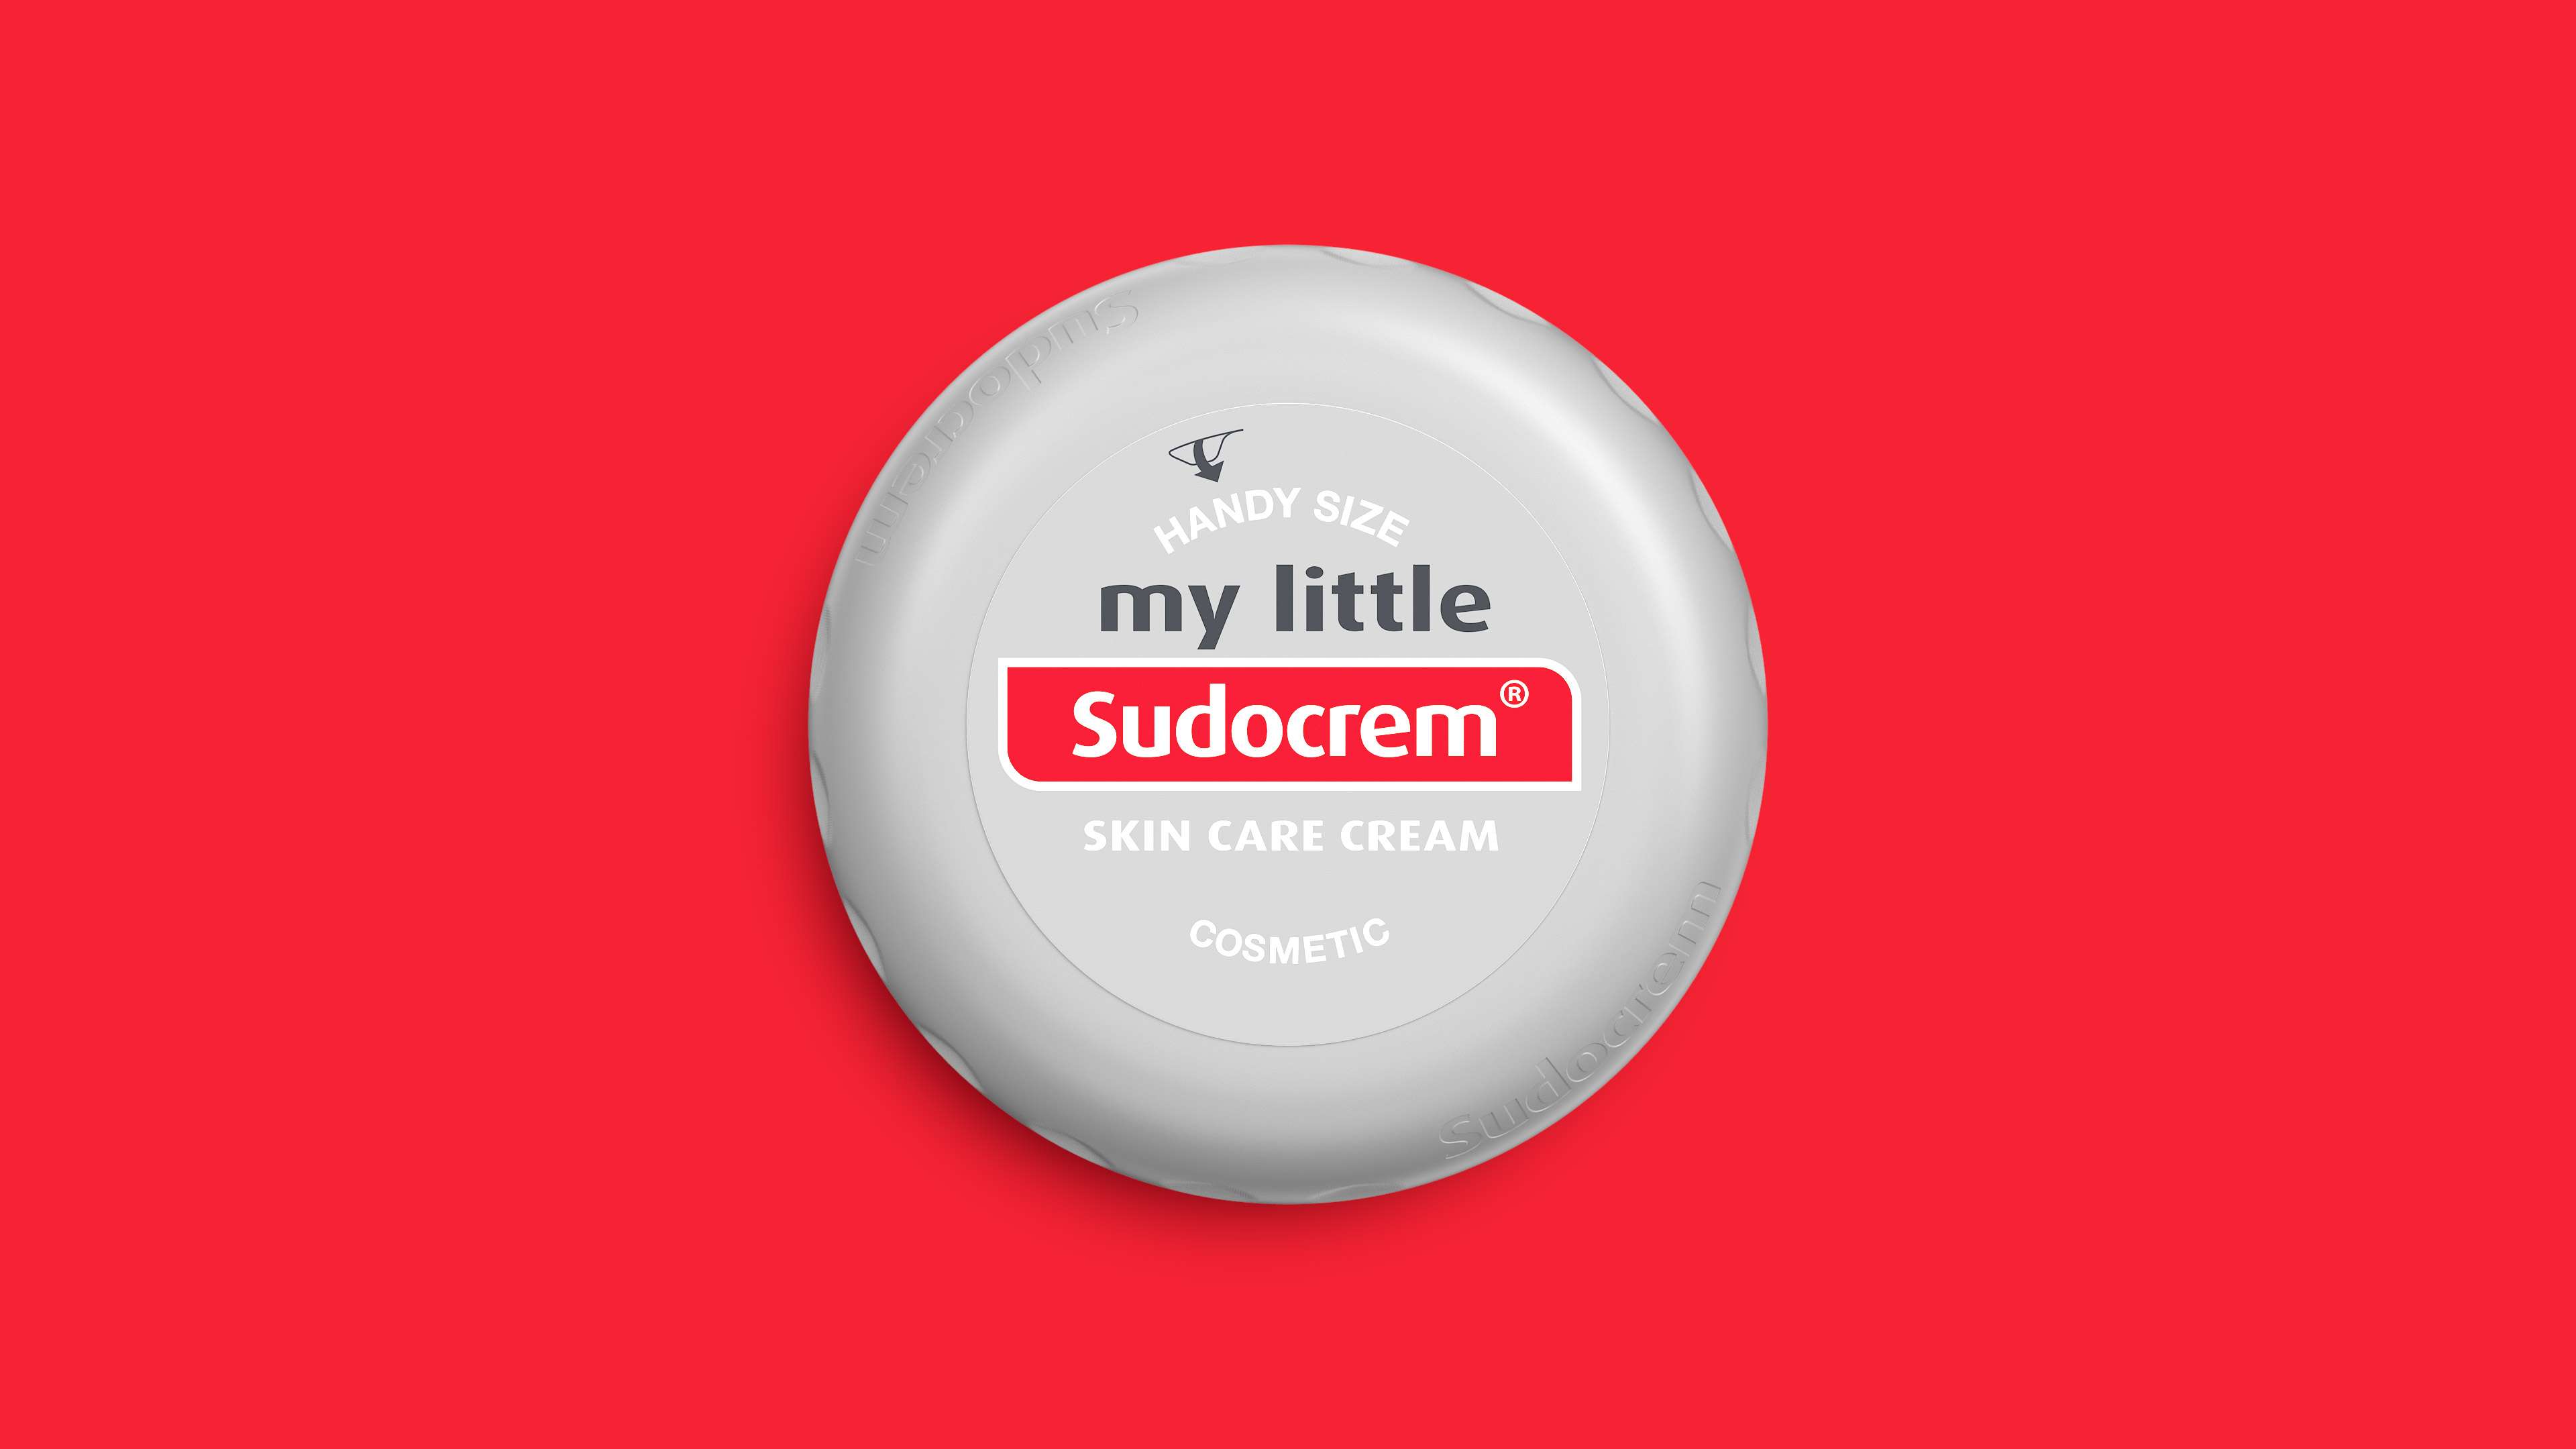 My Little Sudocrem front